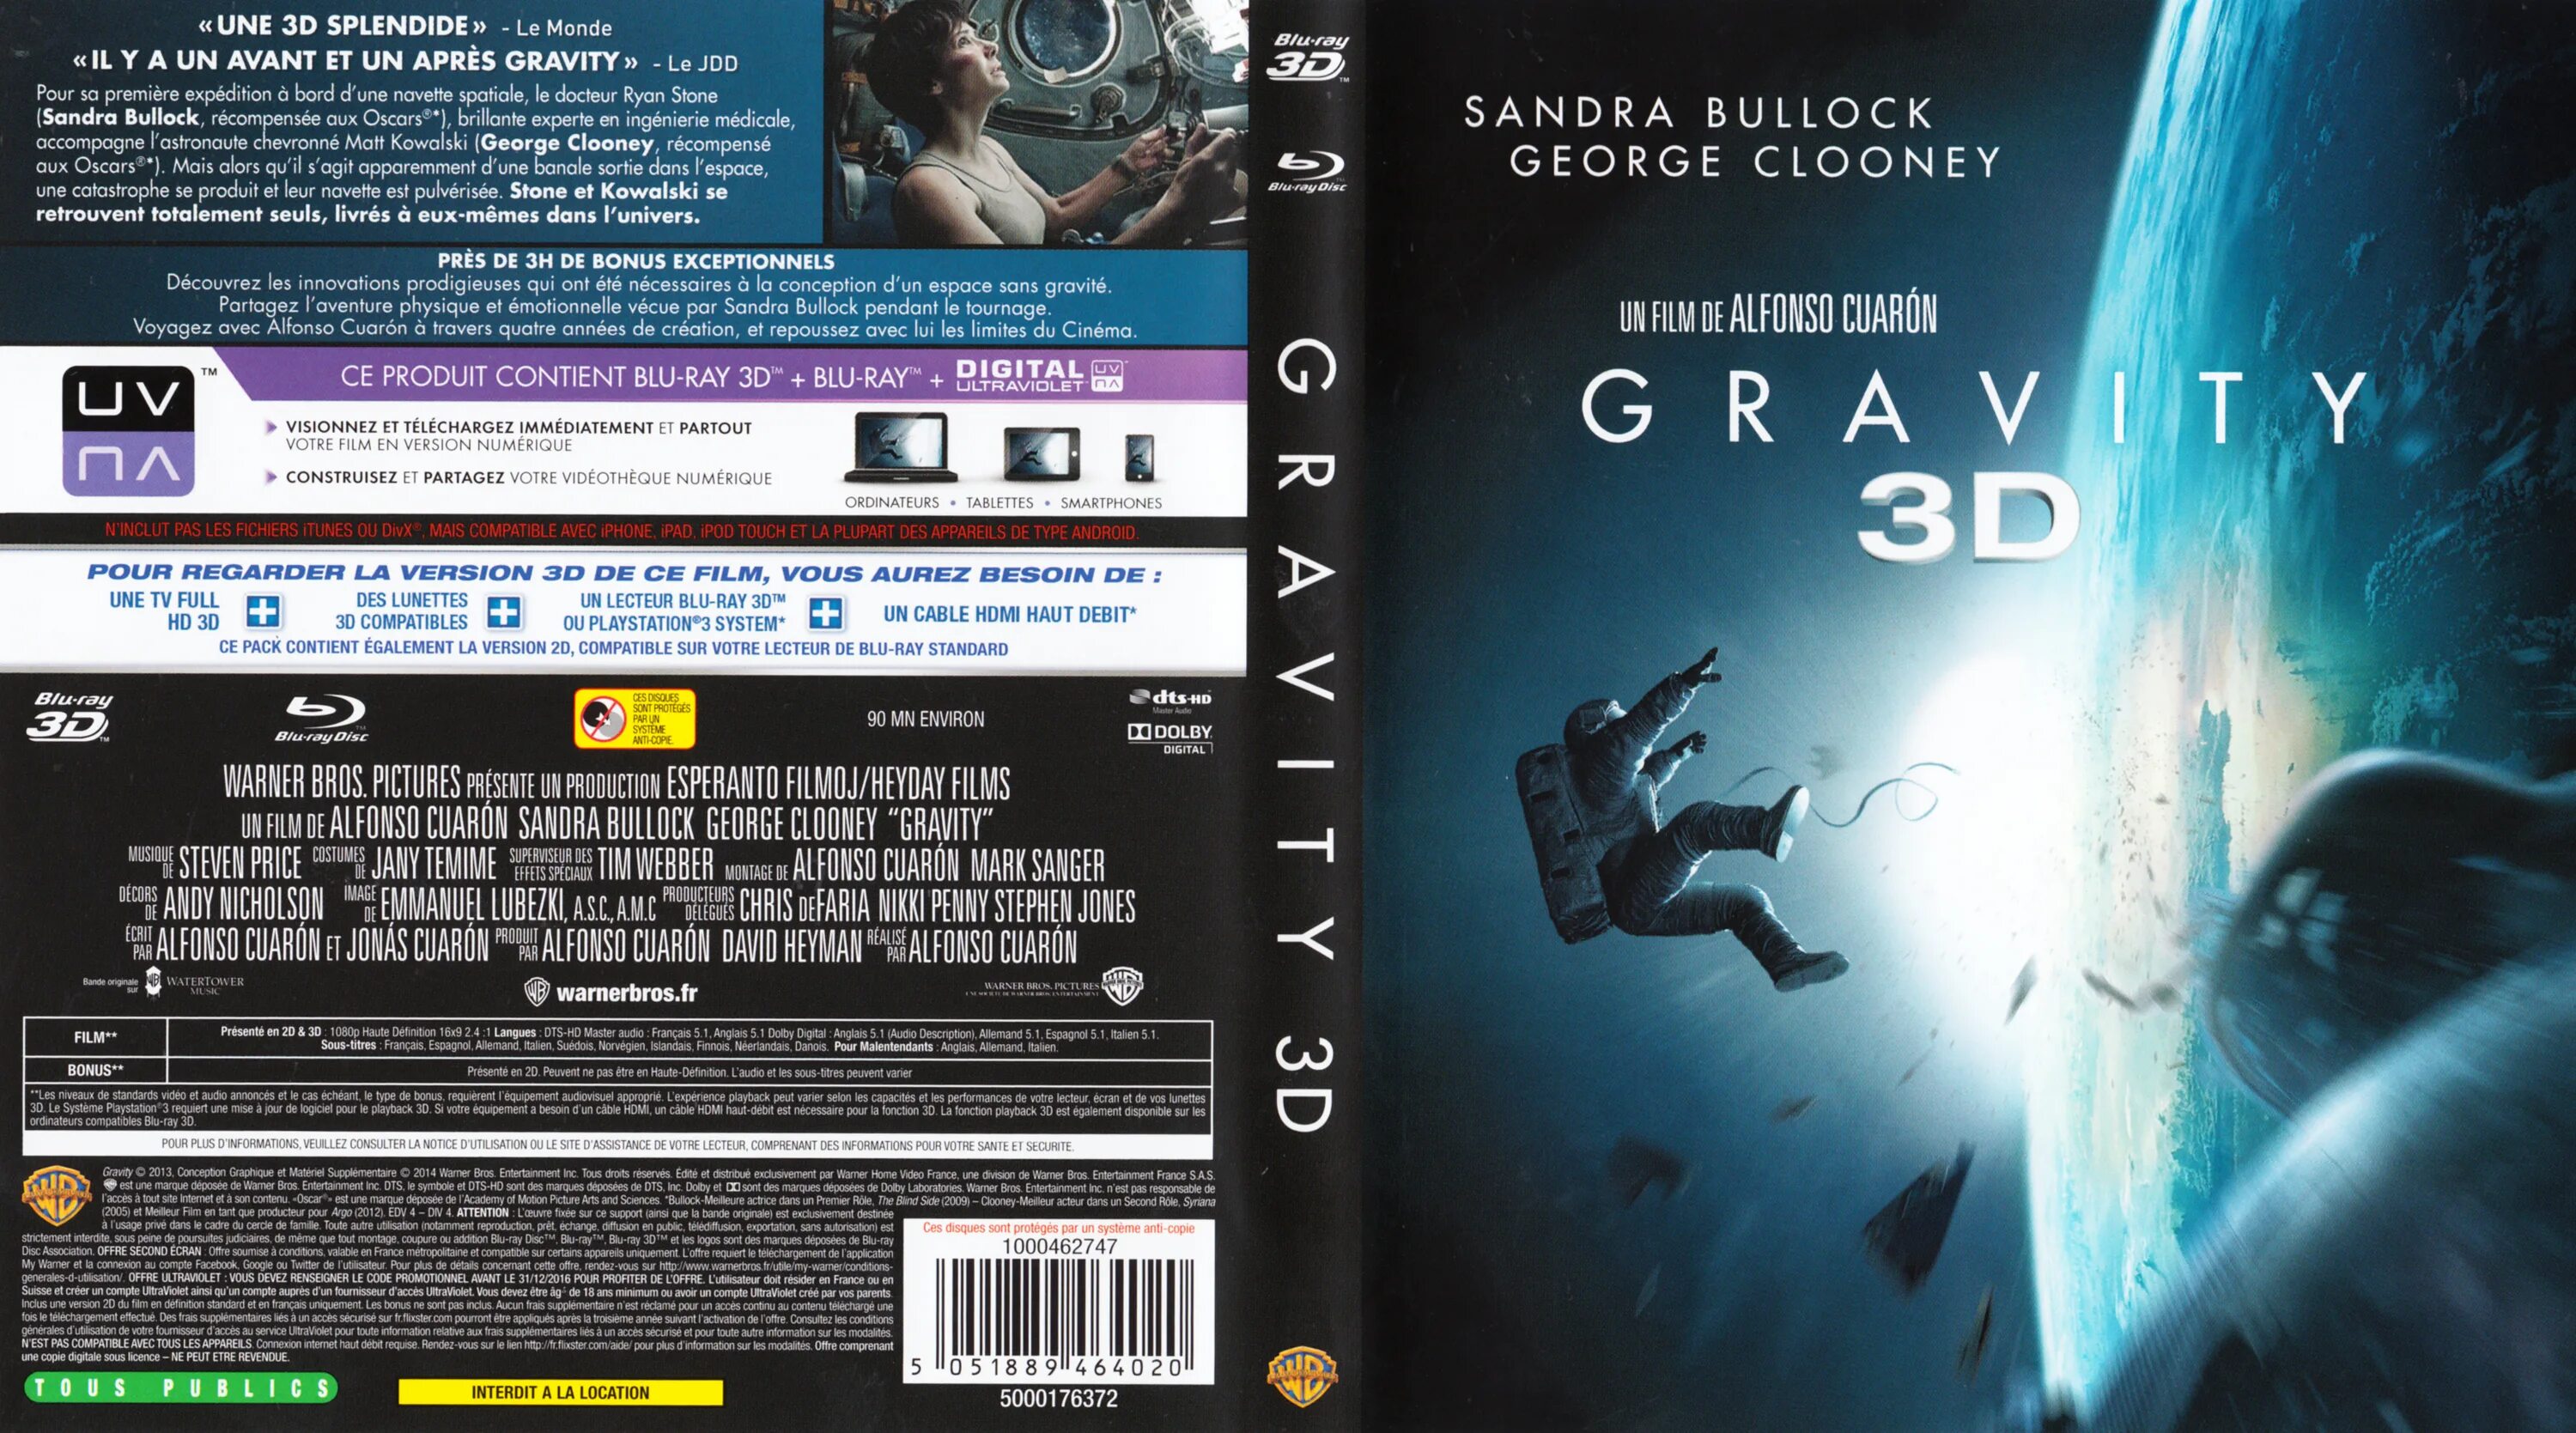 Blu ray магическая битва 2. Gravity 3d Blu-ray. Gravity 2013 Блю Рей. Гравитация обложка Blu-ray.. Диск Гравитация Blu-ray.